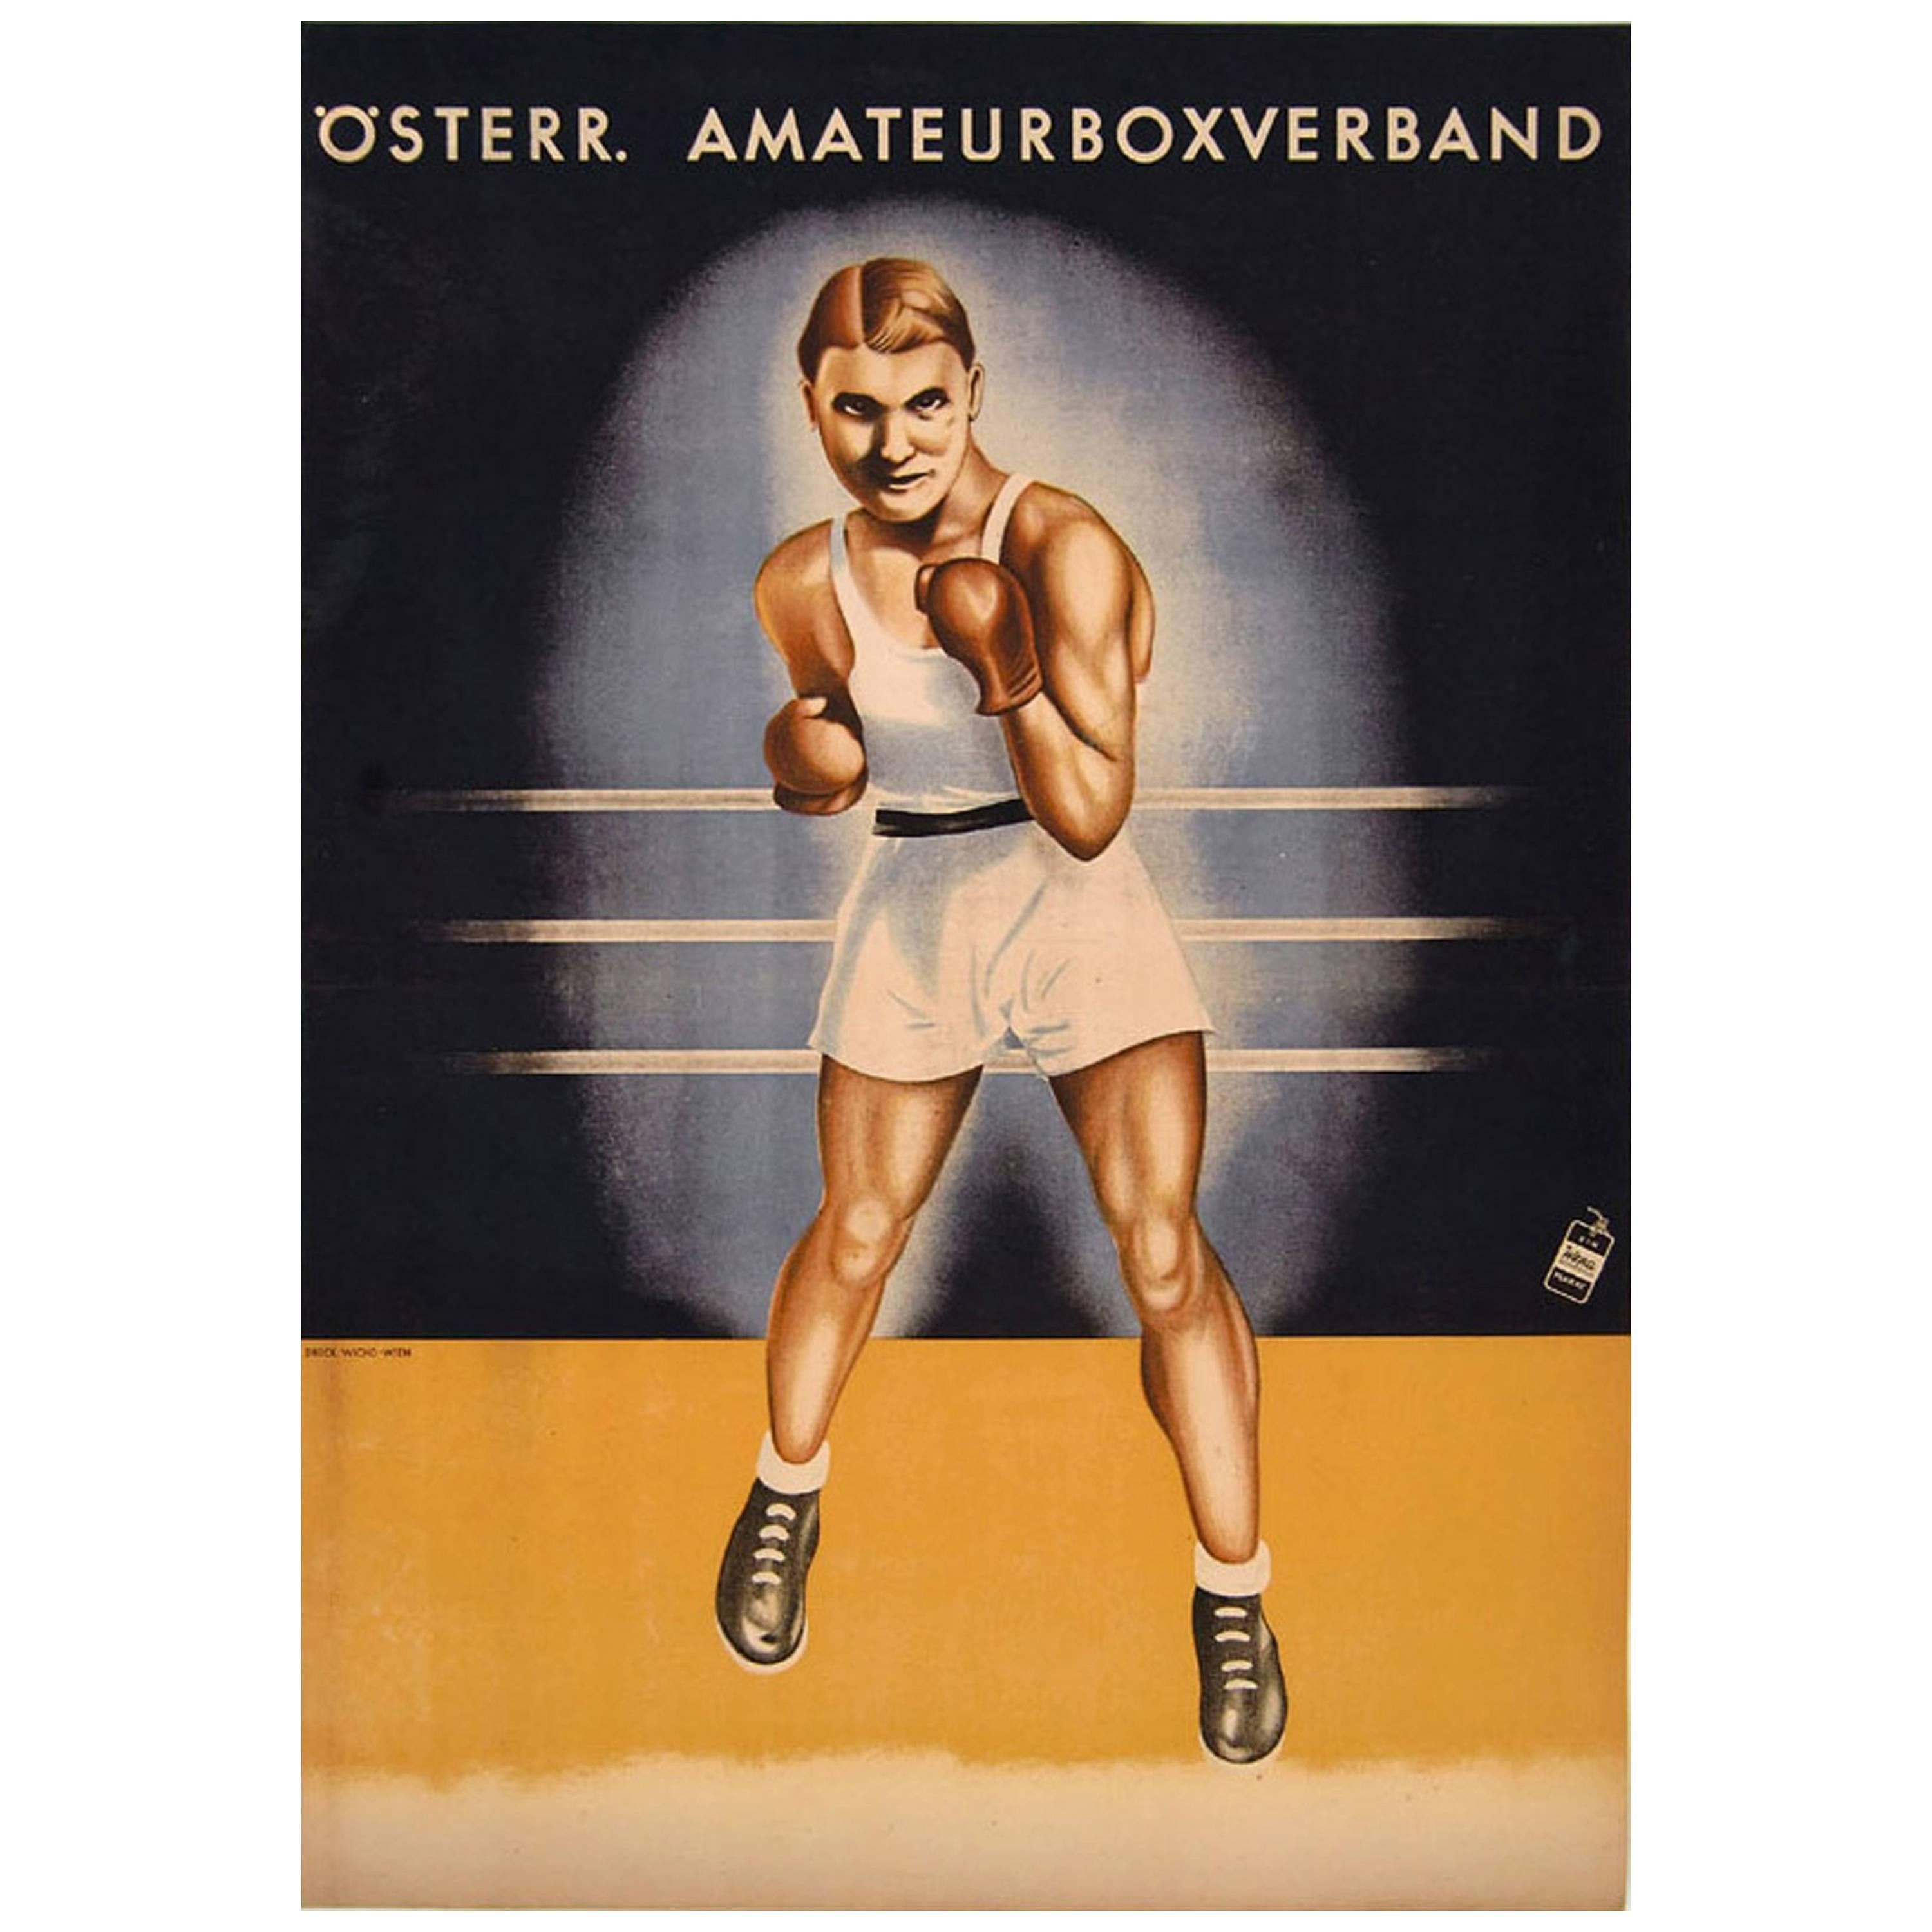 Original Vintage Sport Poster for an Amateur Boxing Competition